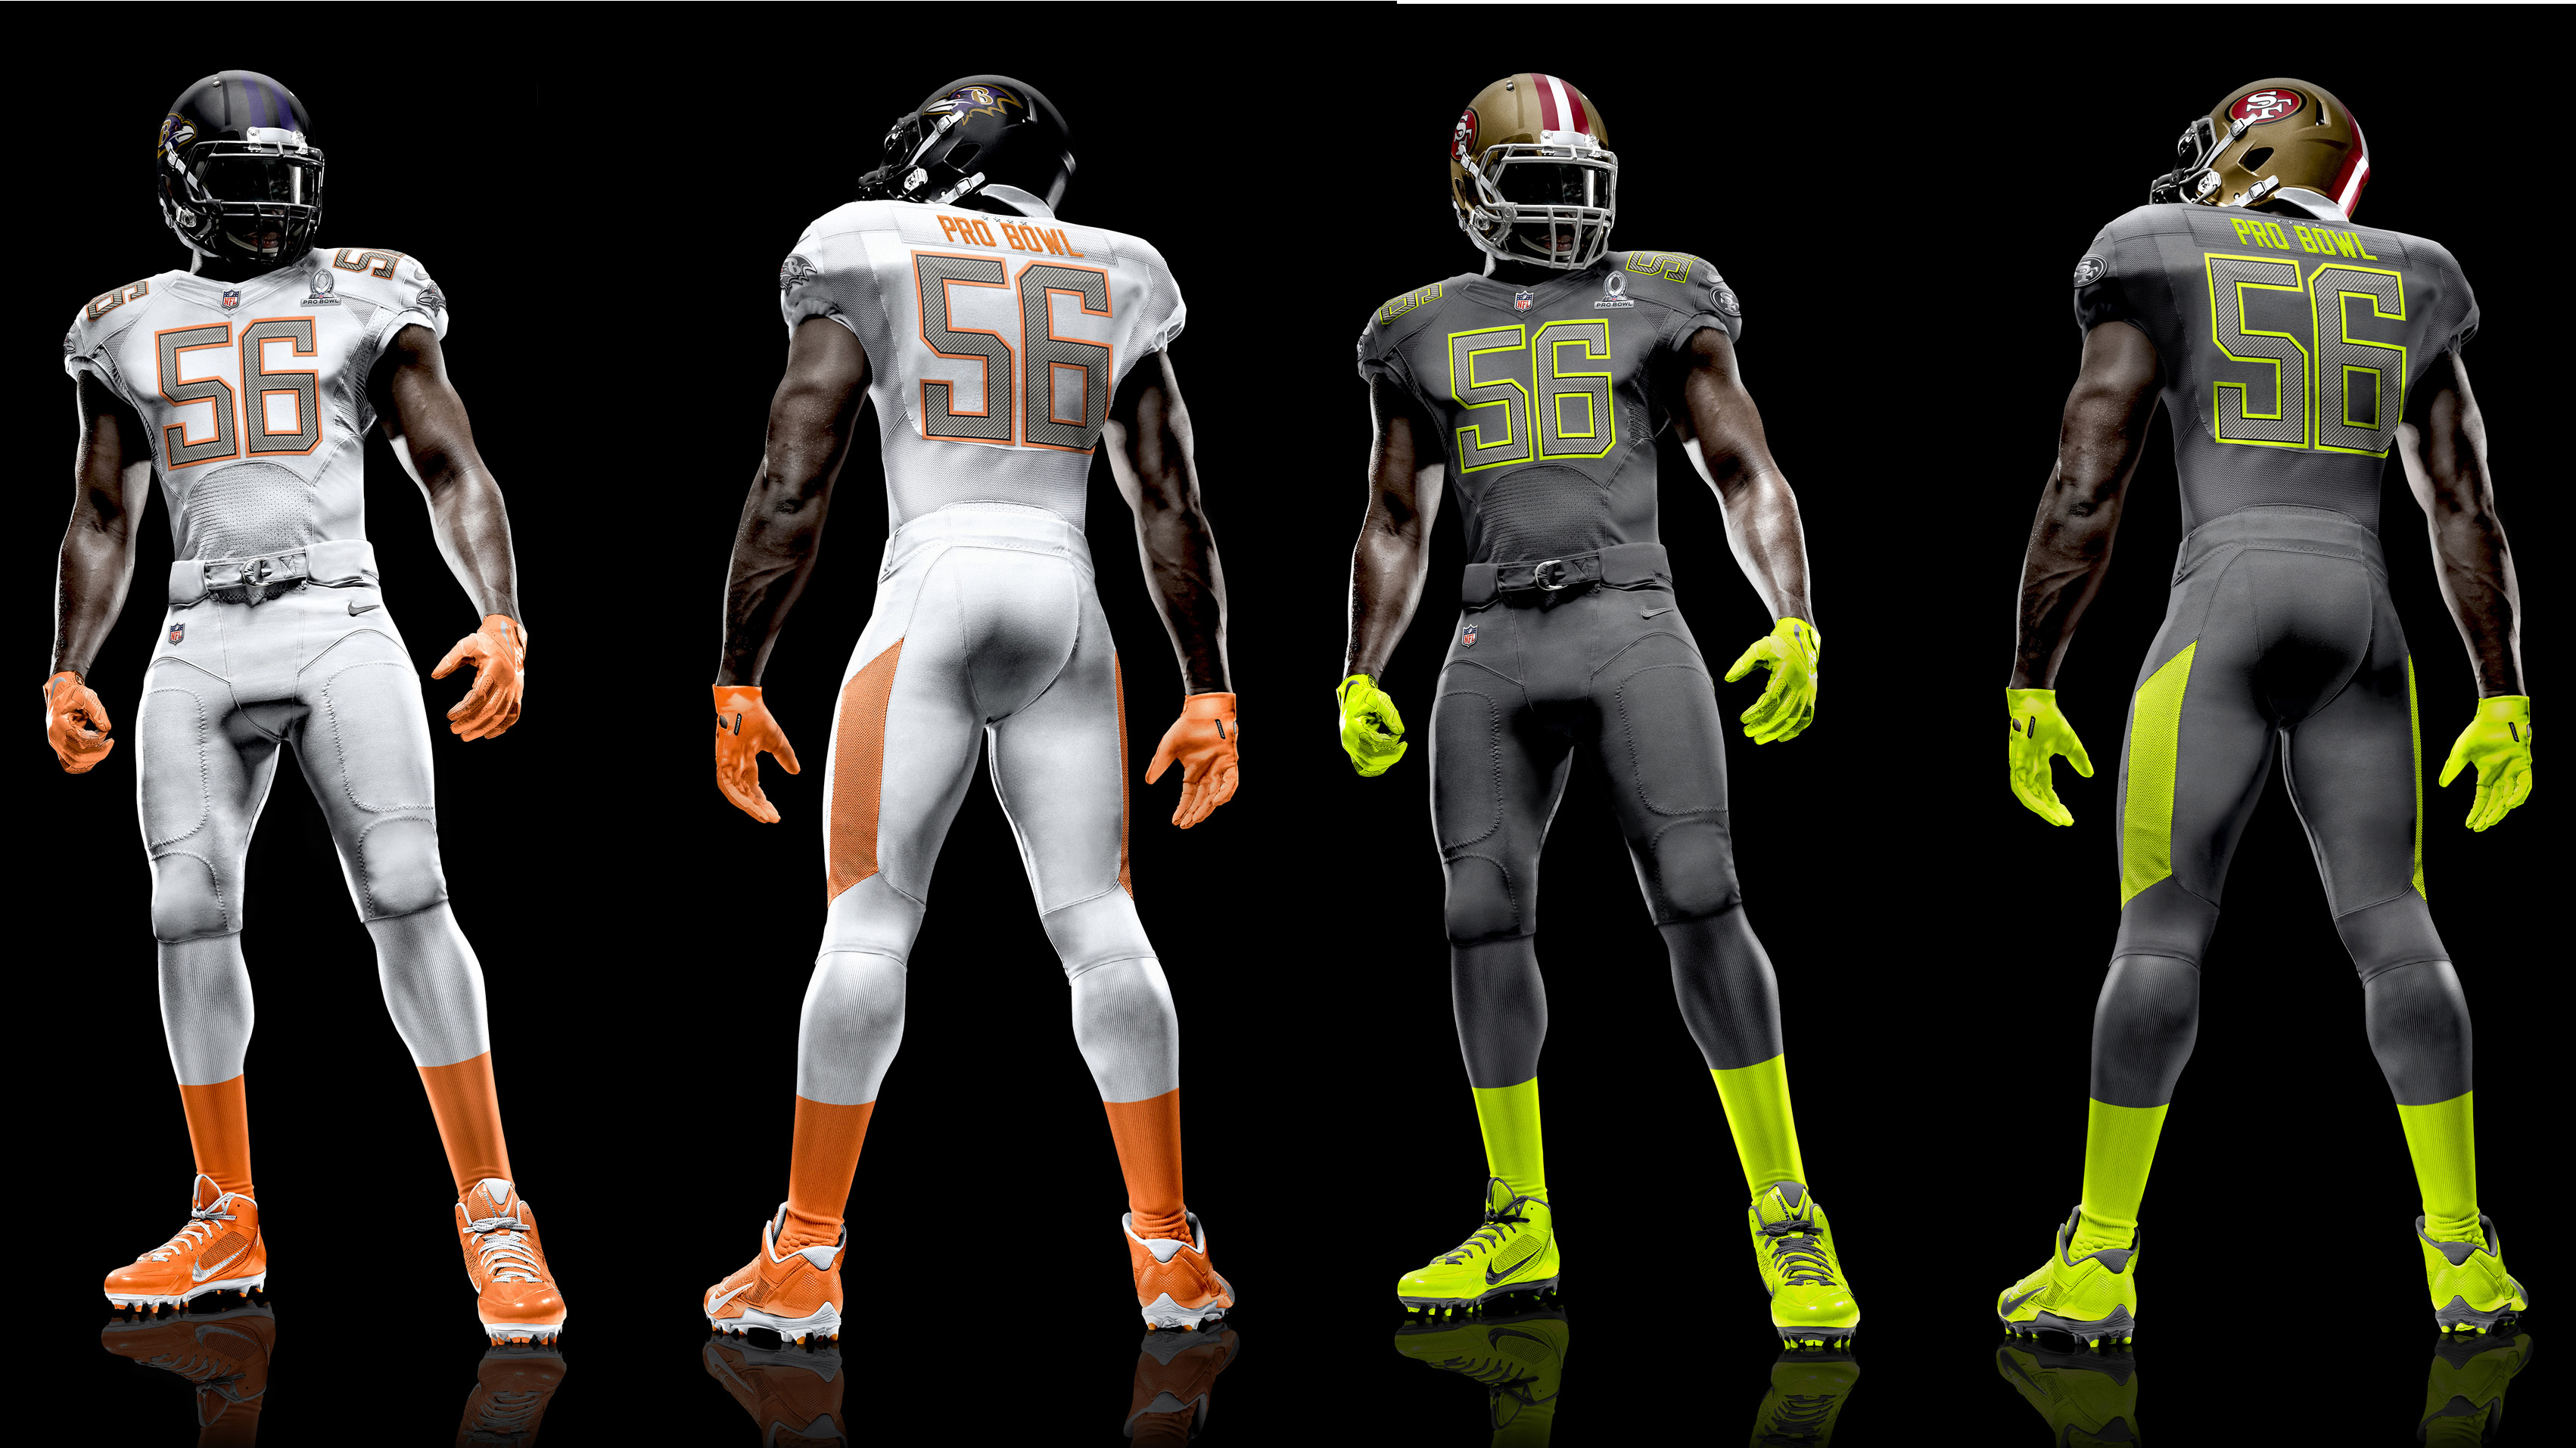 NFL goes nextgen with new Pro Bowl uniforms